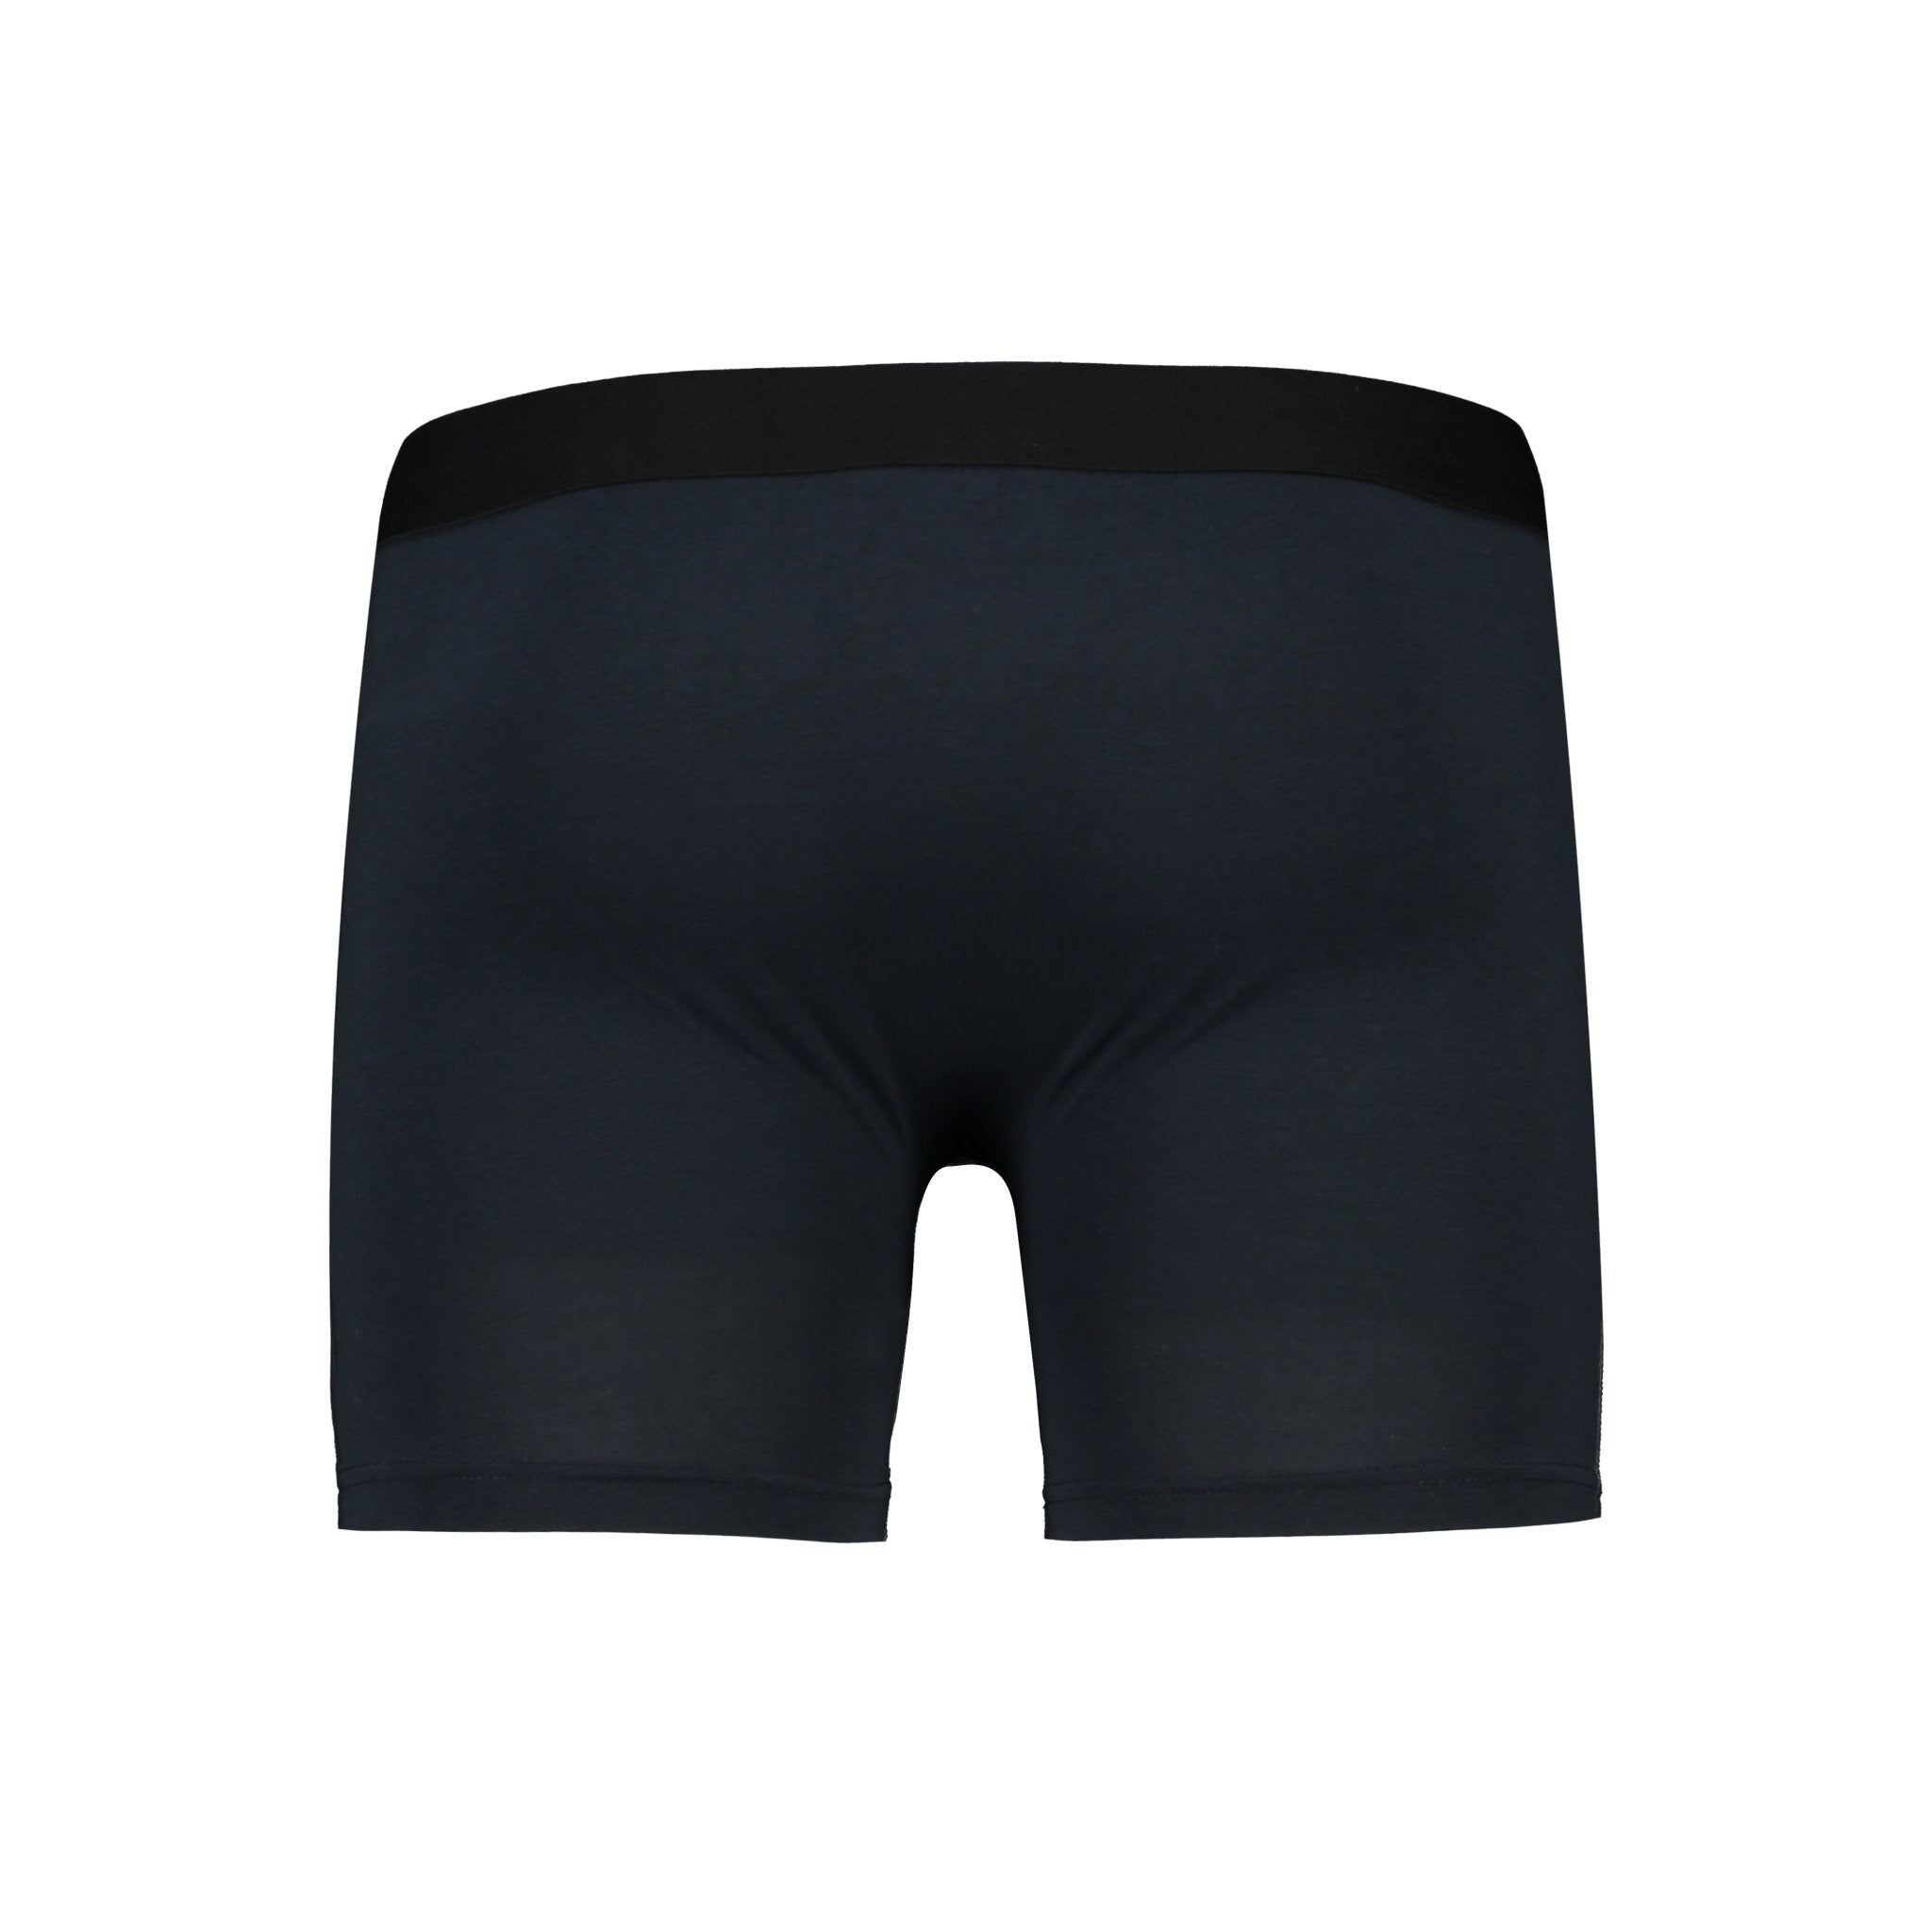 FTM Trans Boxer STP/Packing Underwear